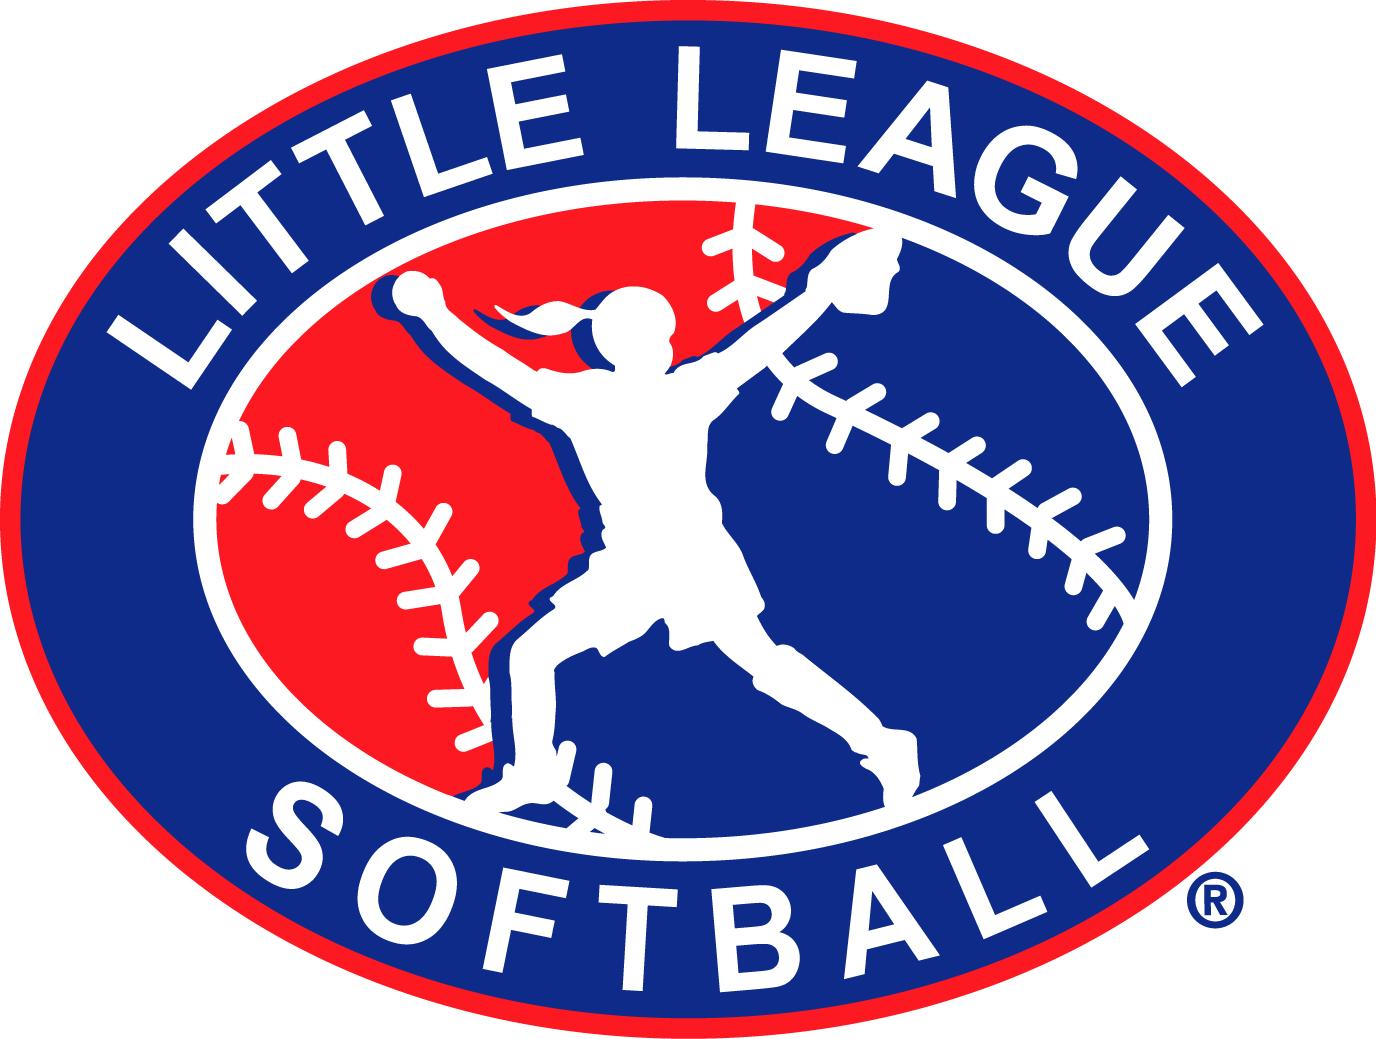 Little-League-Softball[1]